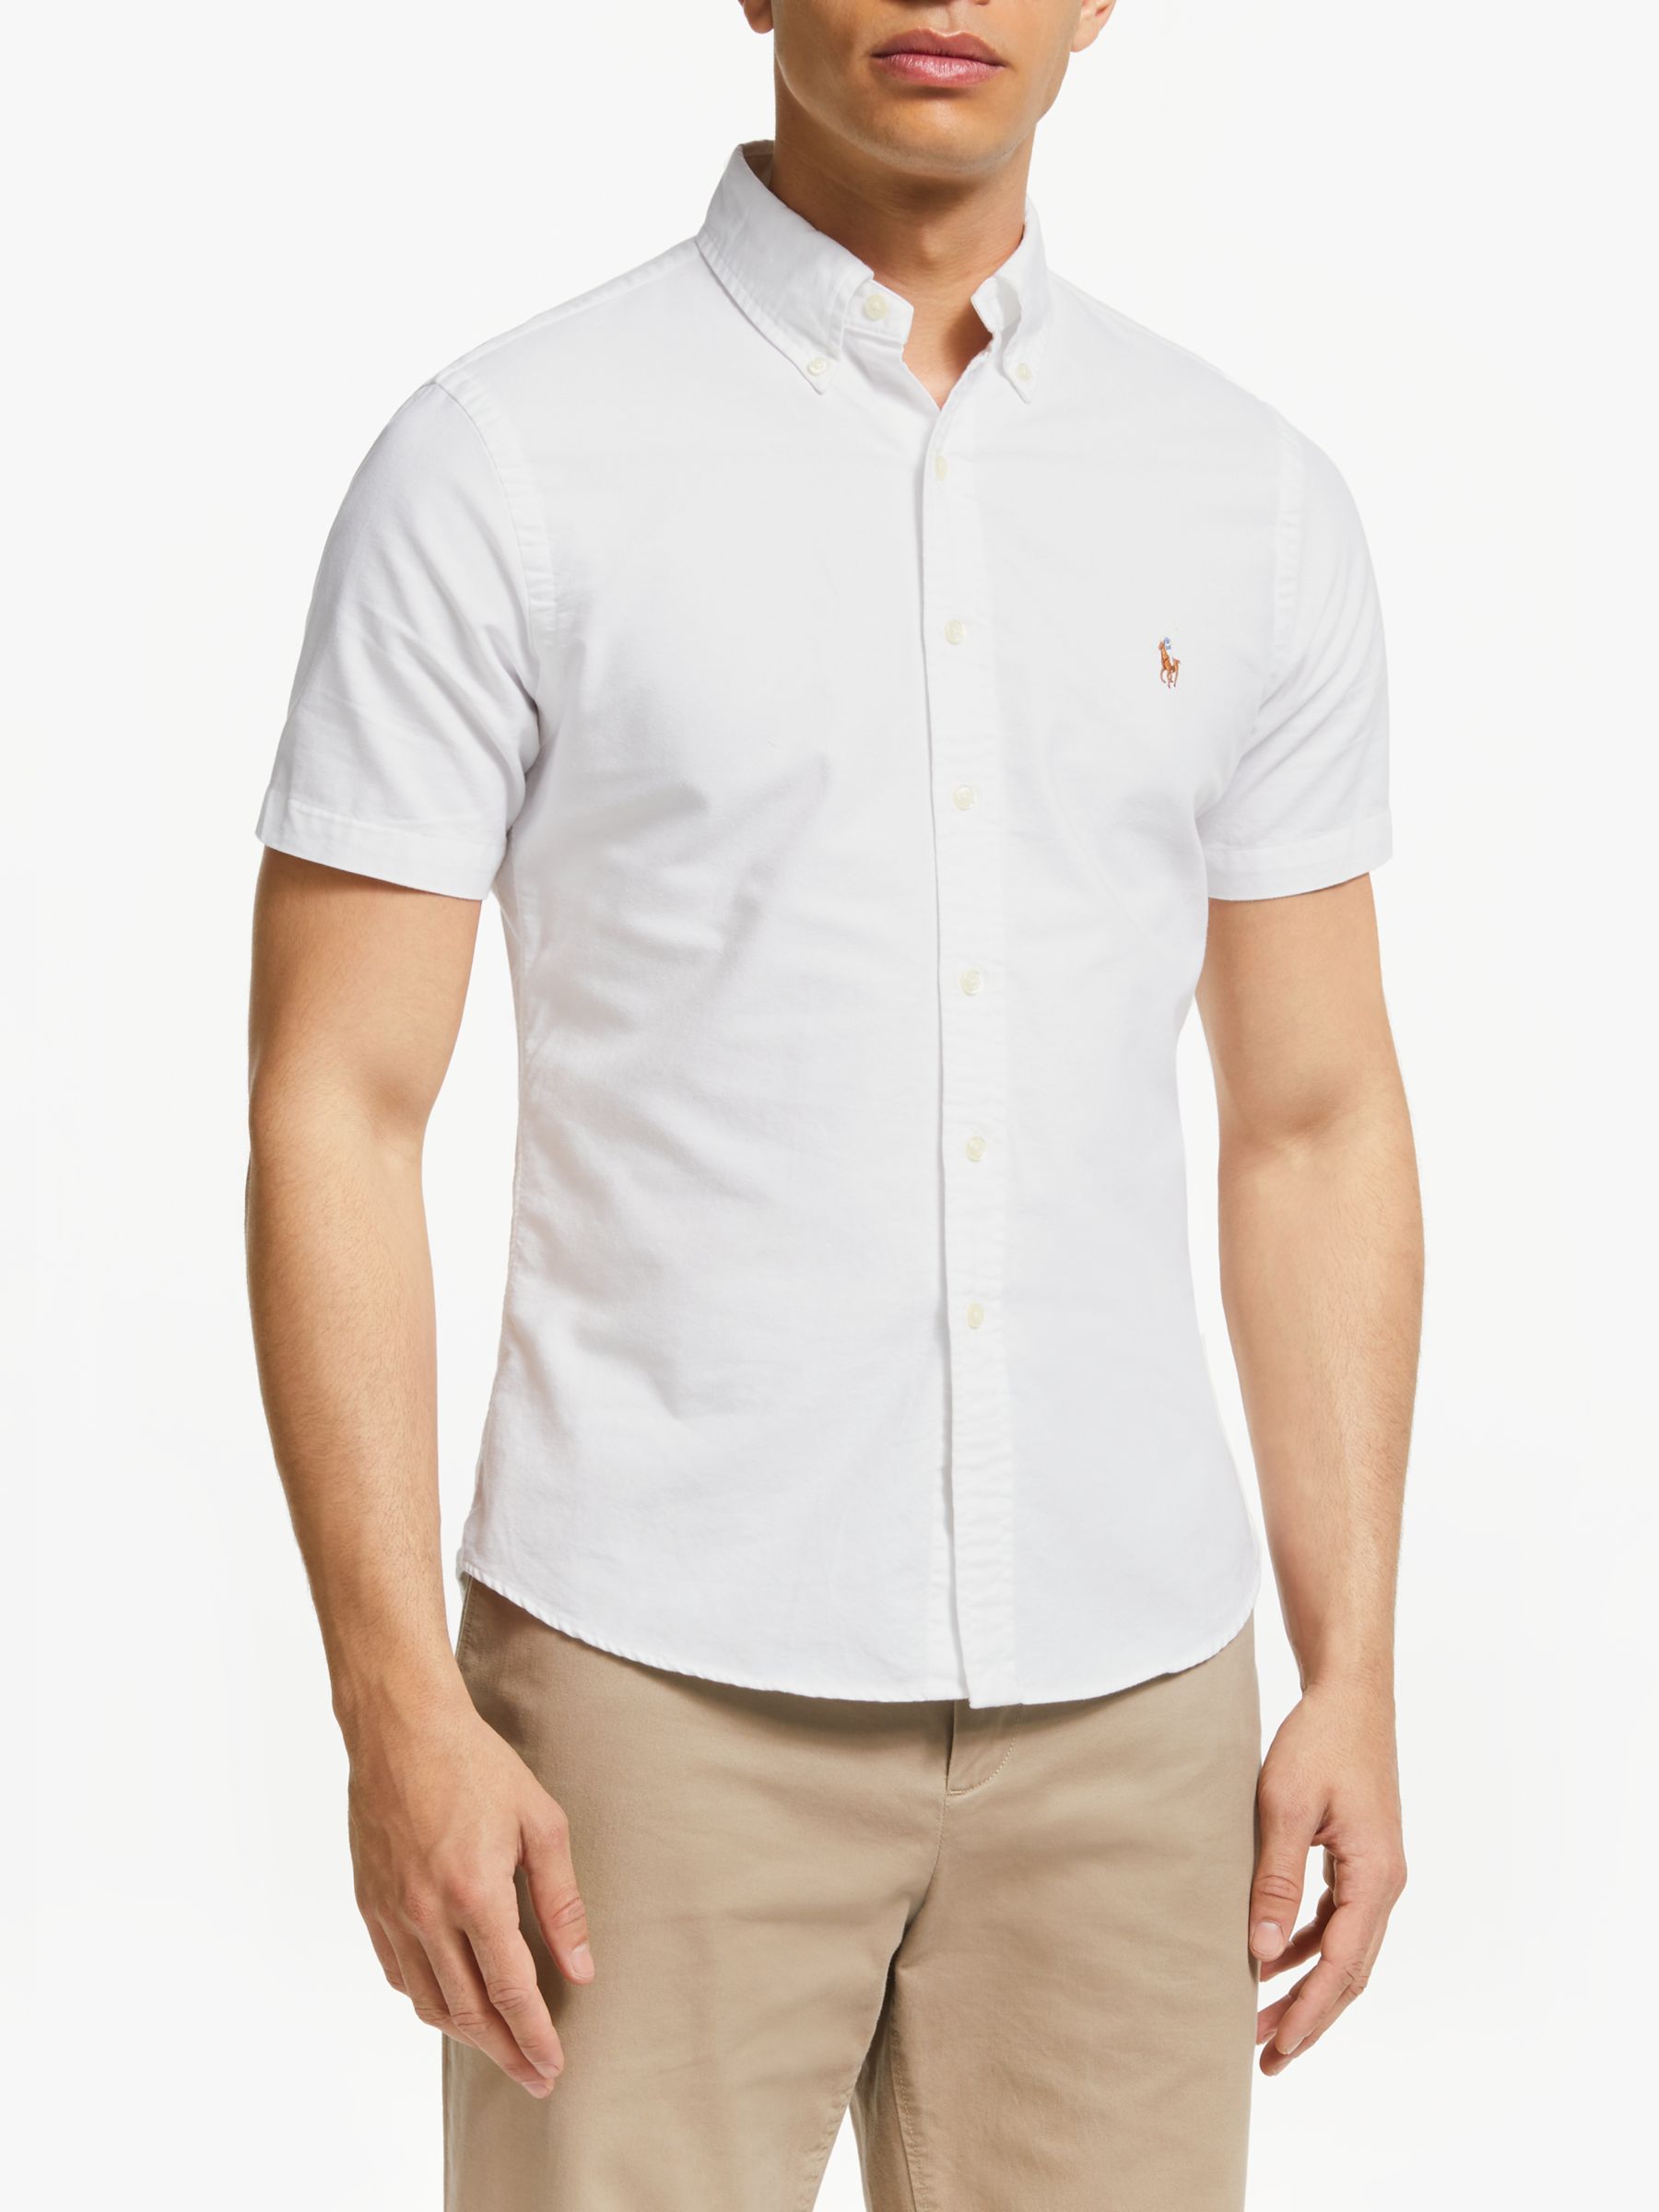 polo ralph lauren white short sleeve shirt